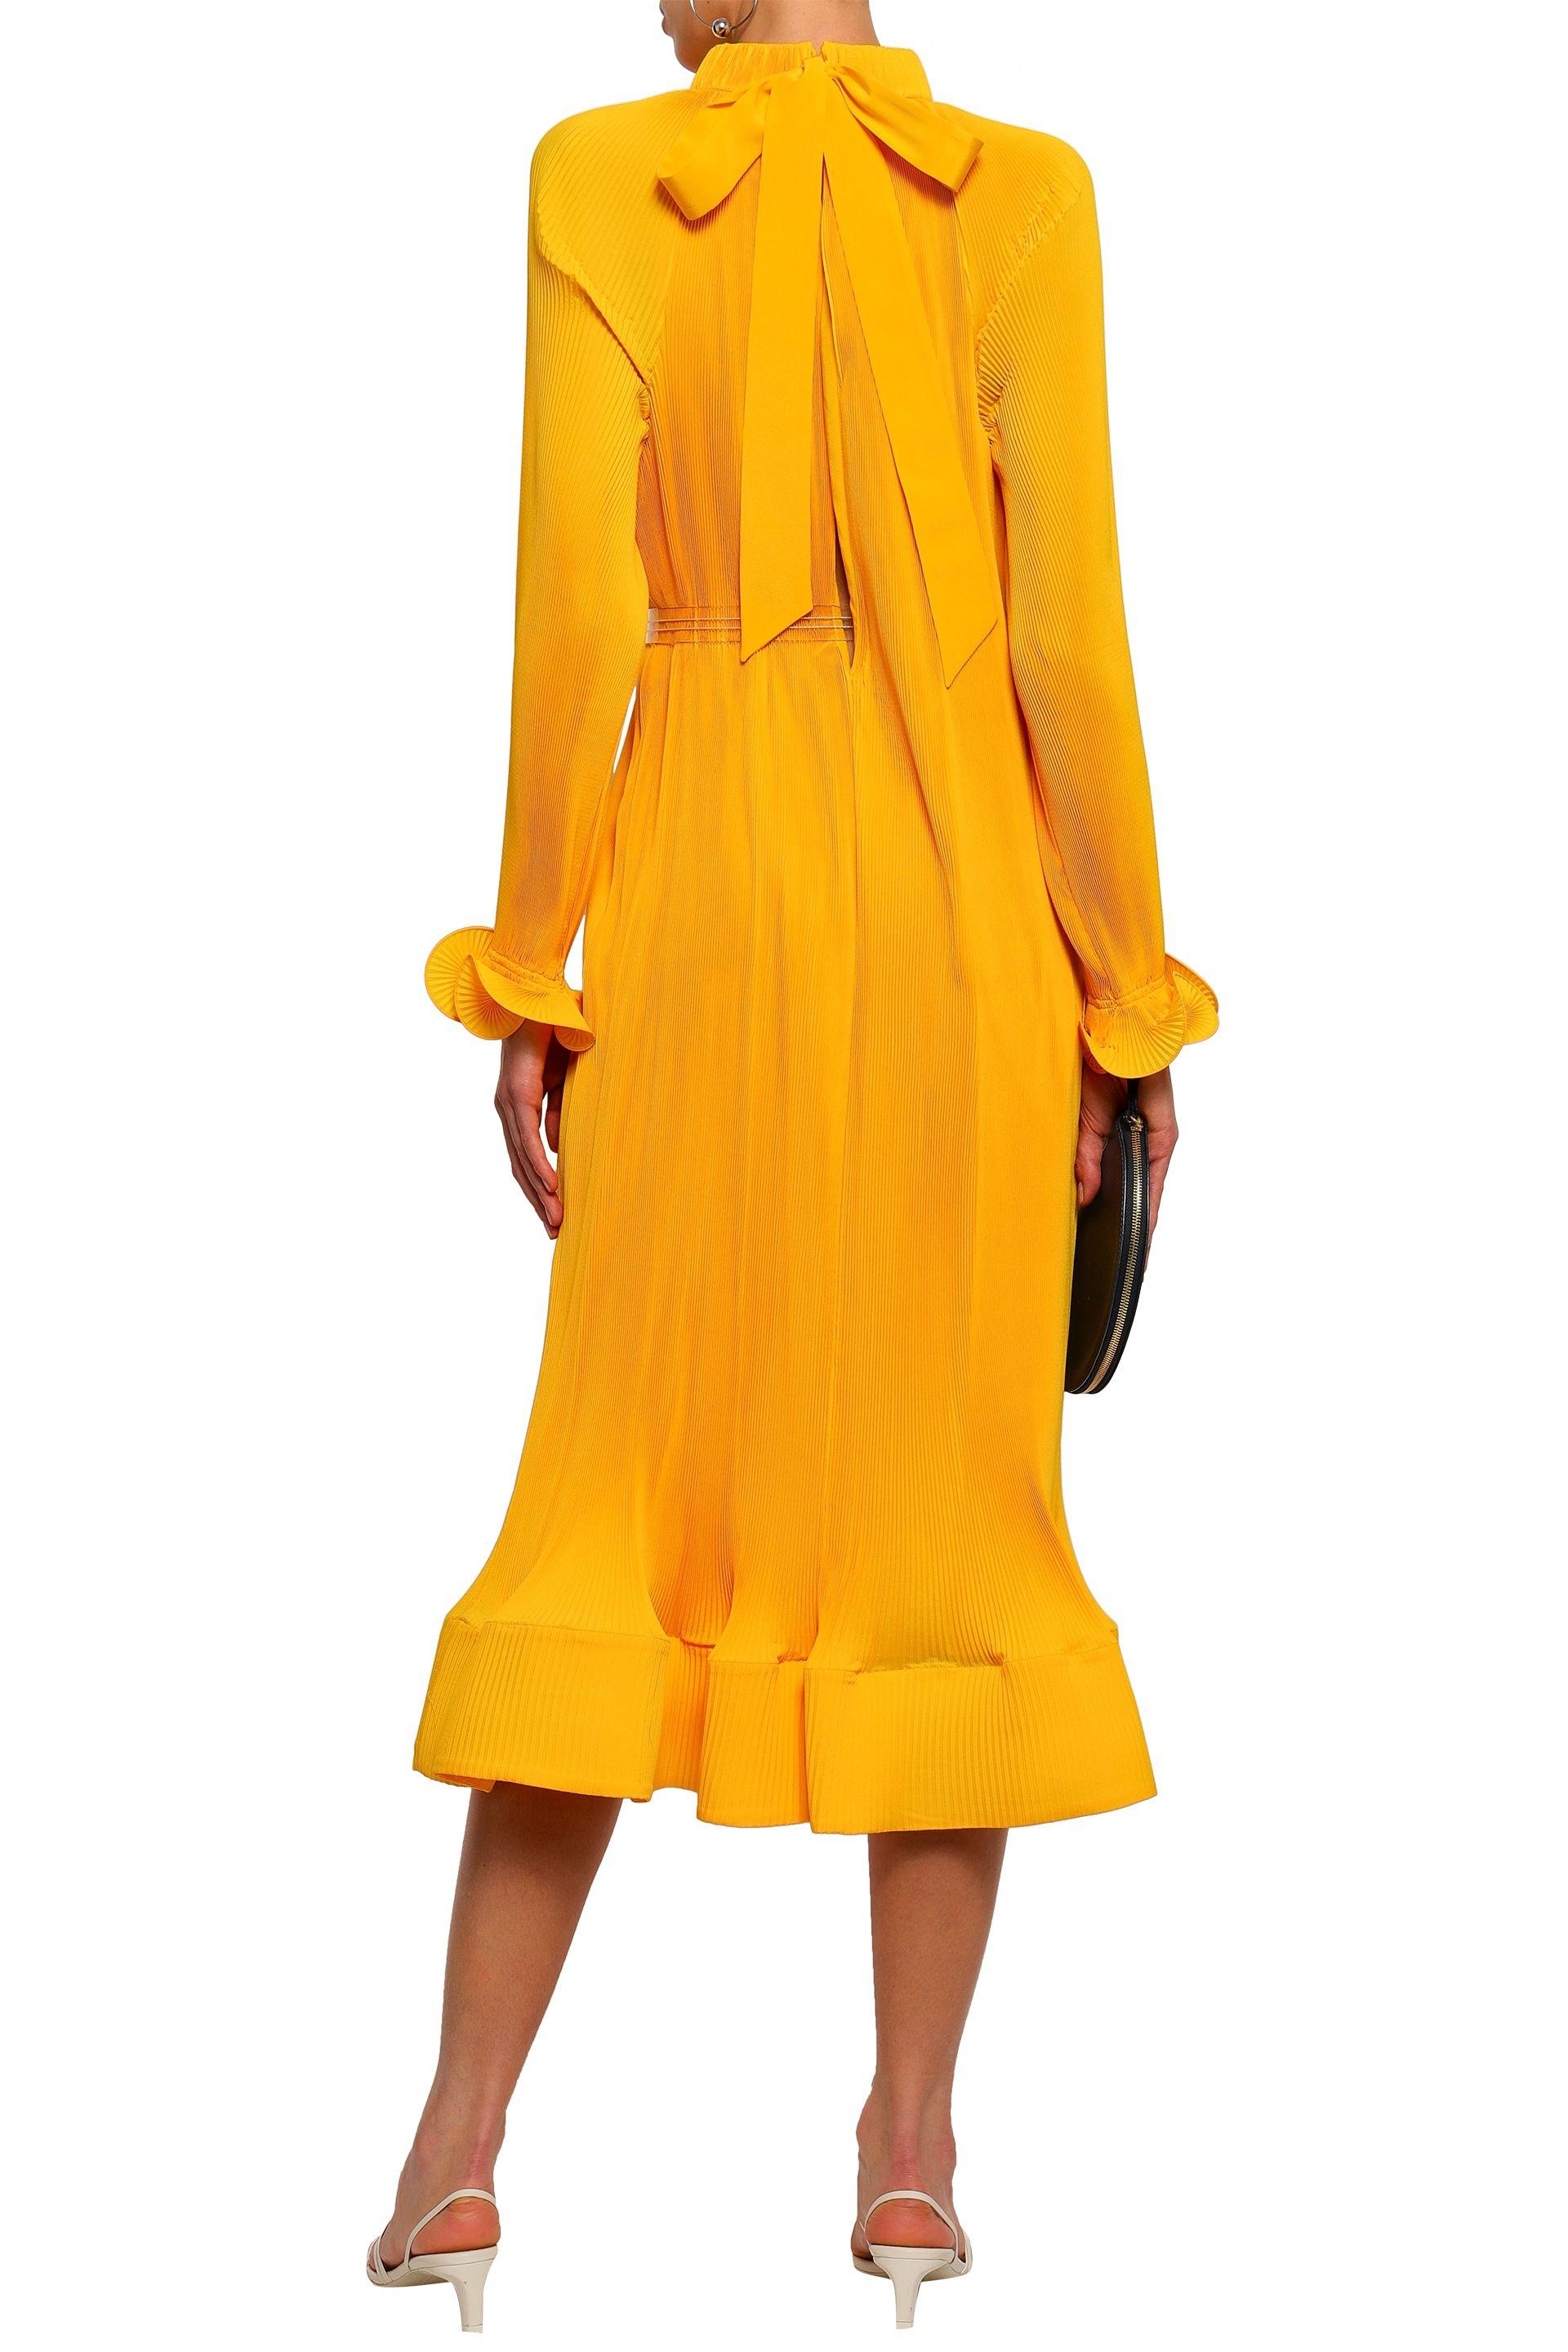 Tibi Satin Fluted Plissé-crepe Midi Dress Saffron in Yellow - Lyst